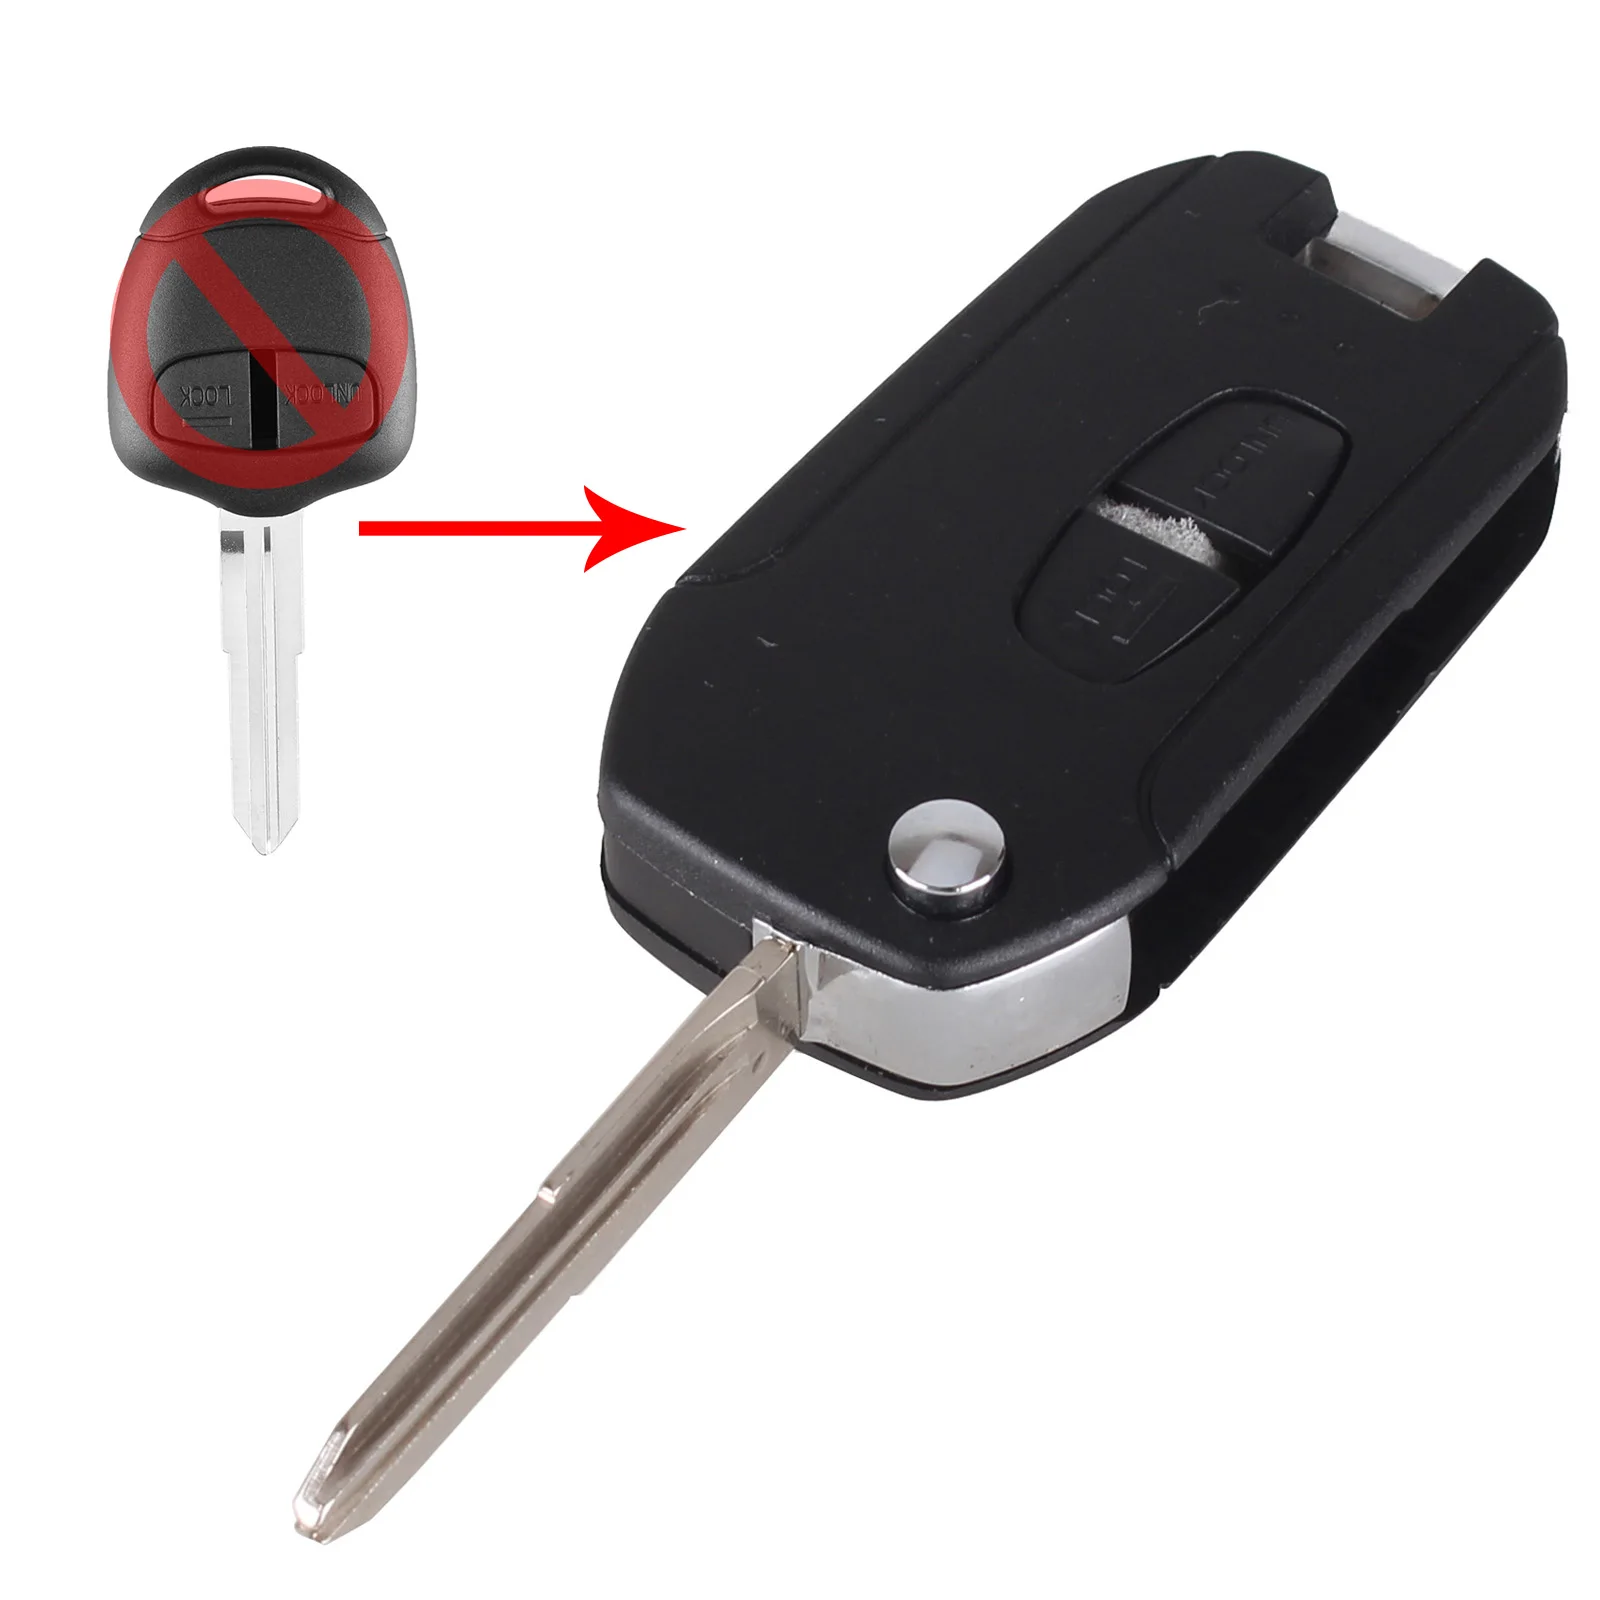 Dandkey 2/3 кнопки автомобиля дистанционного ключа Shel Fob чехол для Mitsubishi Pajero Lancer EVO Colt Outlander Mirage с правым левым лезвием - Количество кнопок: Right Blade 2B